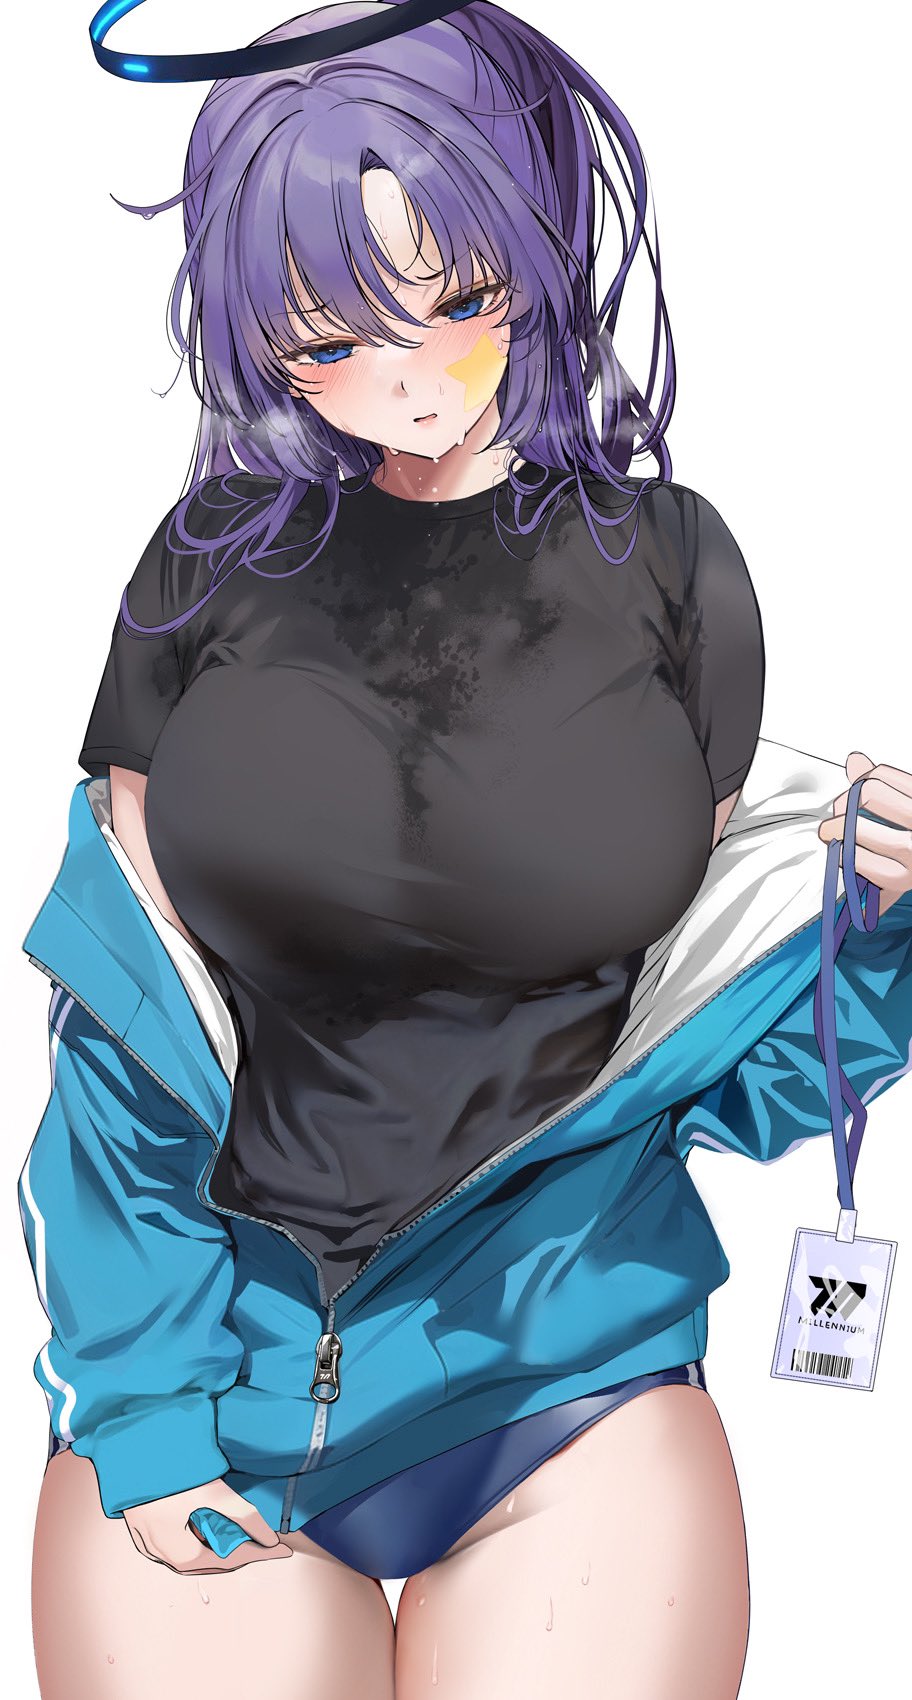 Anime 912x1700 anime anime girls big boobs purple hair blue eyes blushing Blue Archive Hayase Yuuka Marushin artwork black shirt sweat